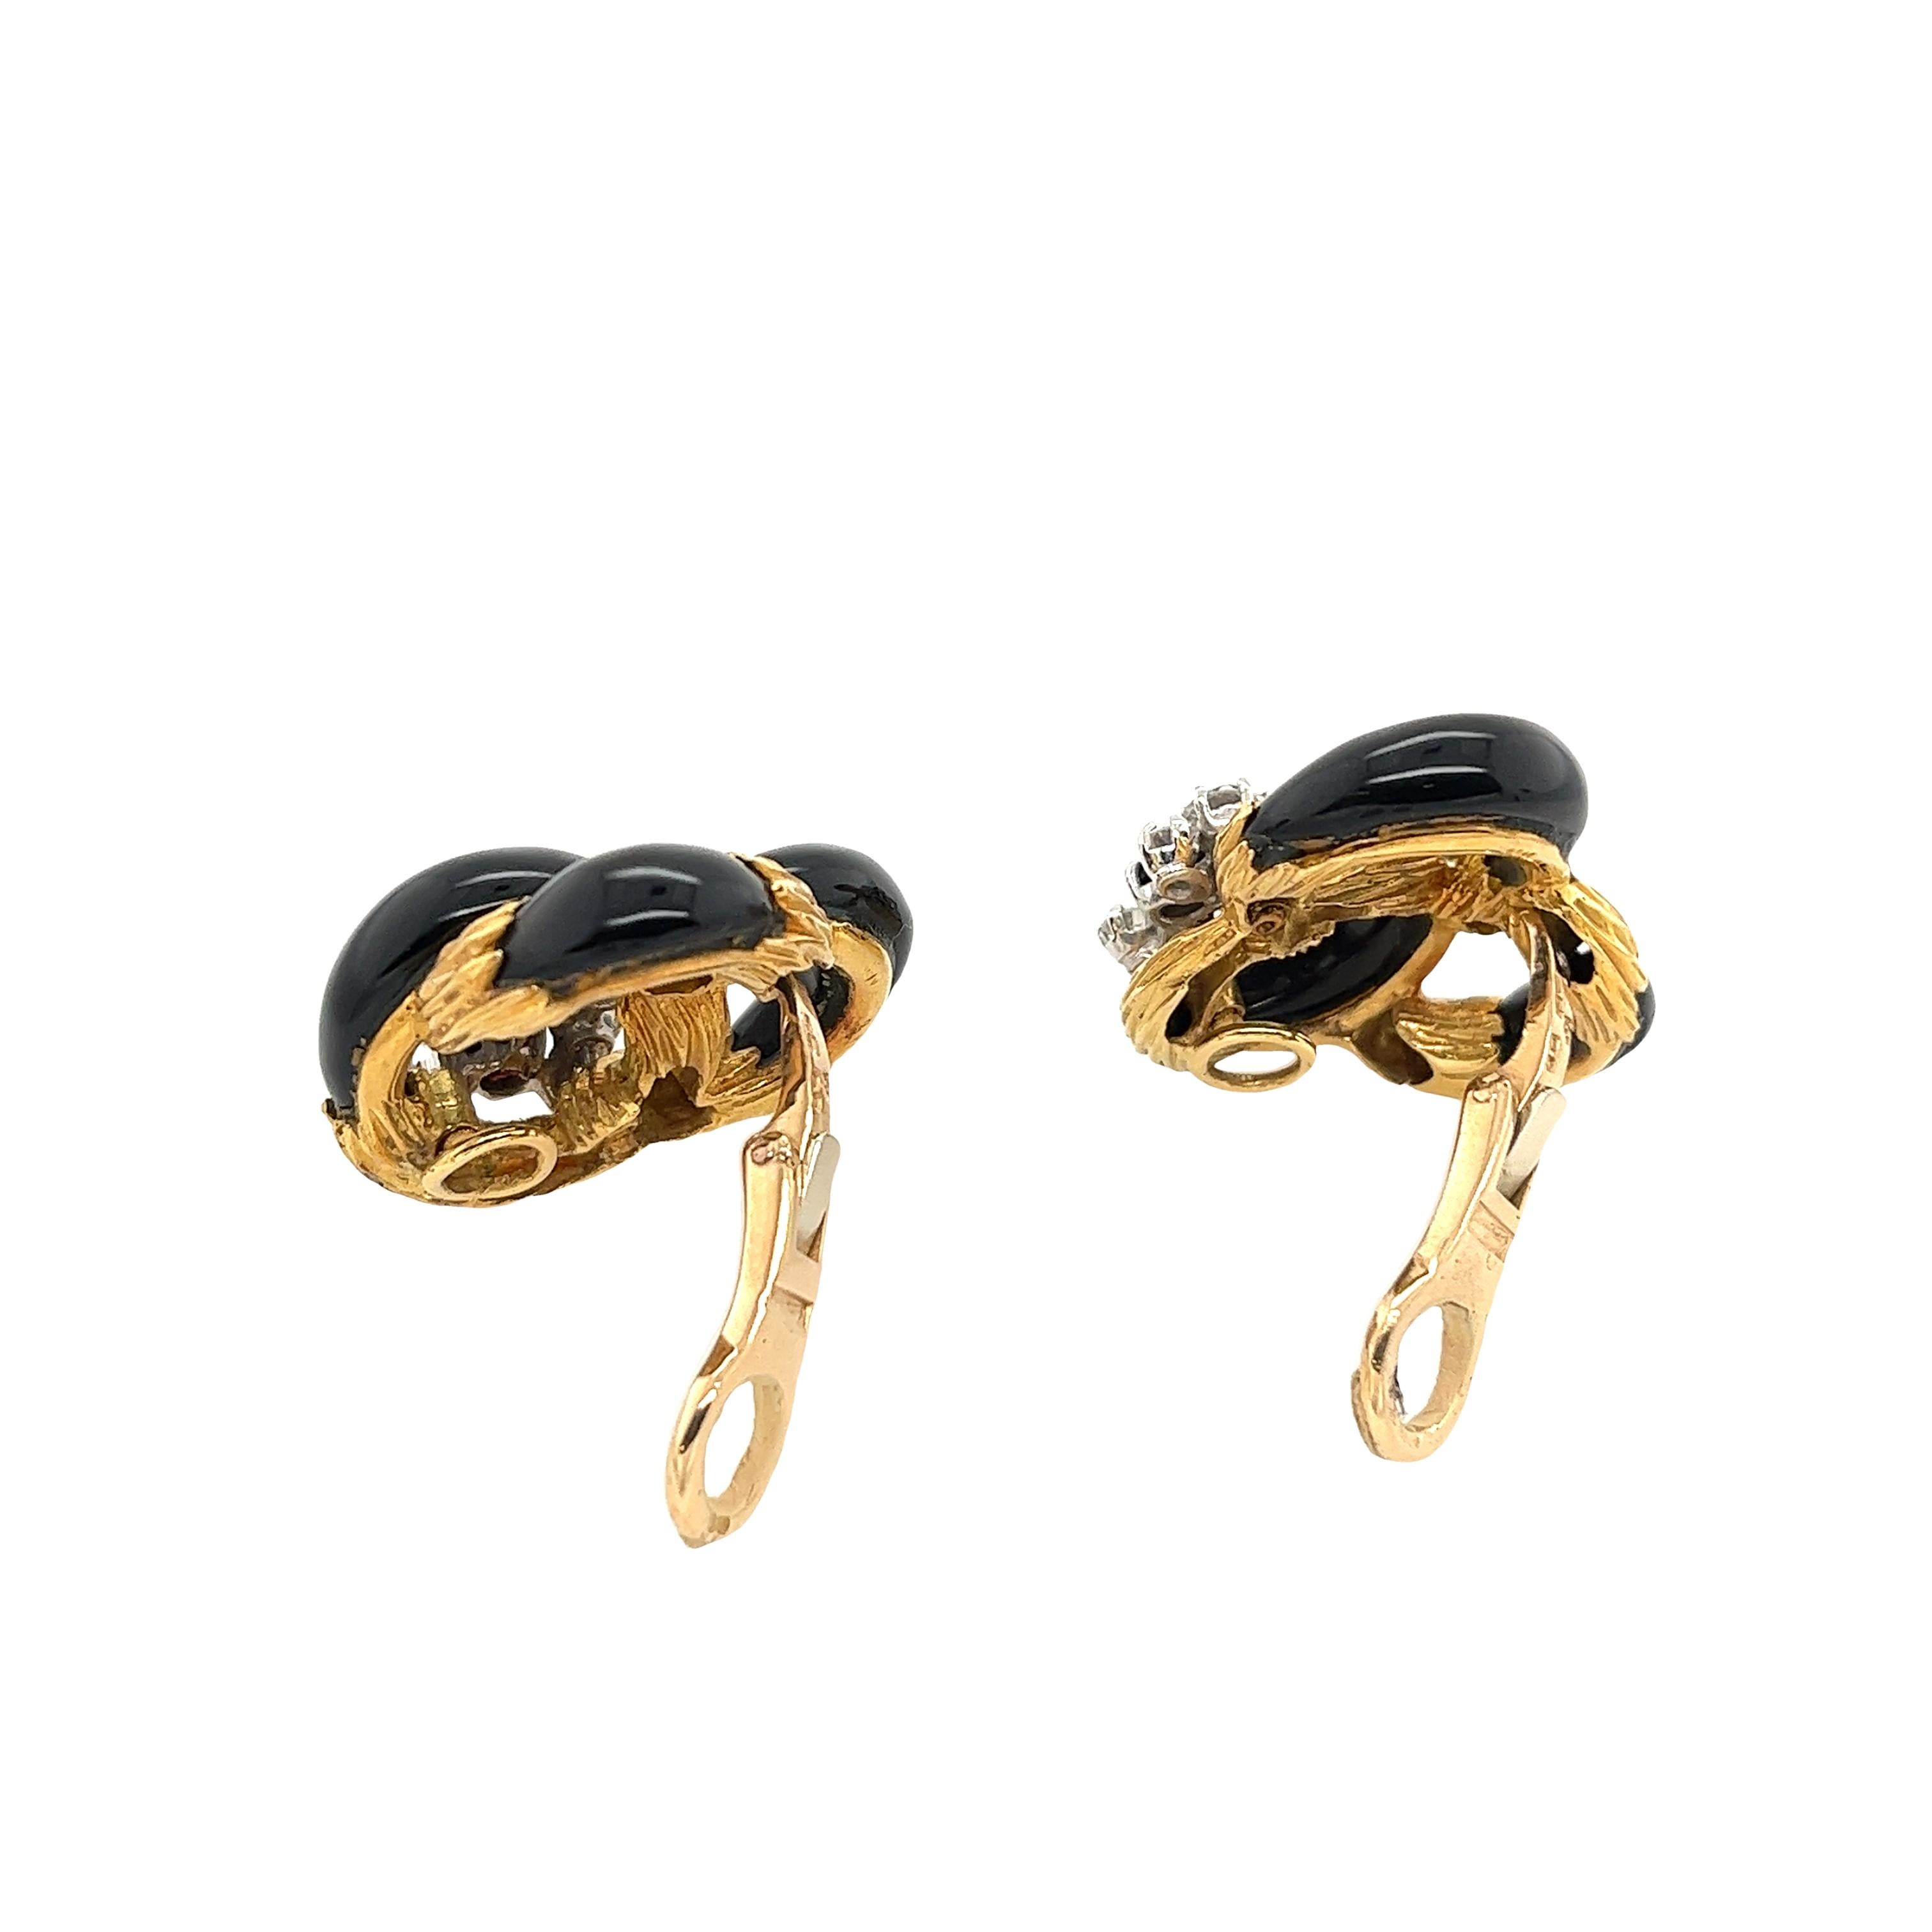 Round Cut Kutchinsky Vintage Diamond Earrings Black Enamel Set In 18ct Yellow Gold